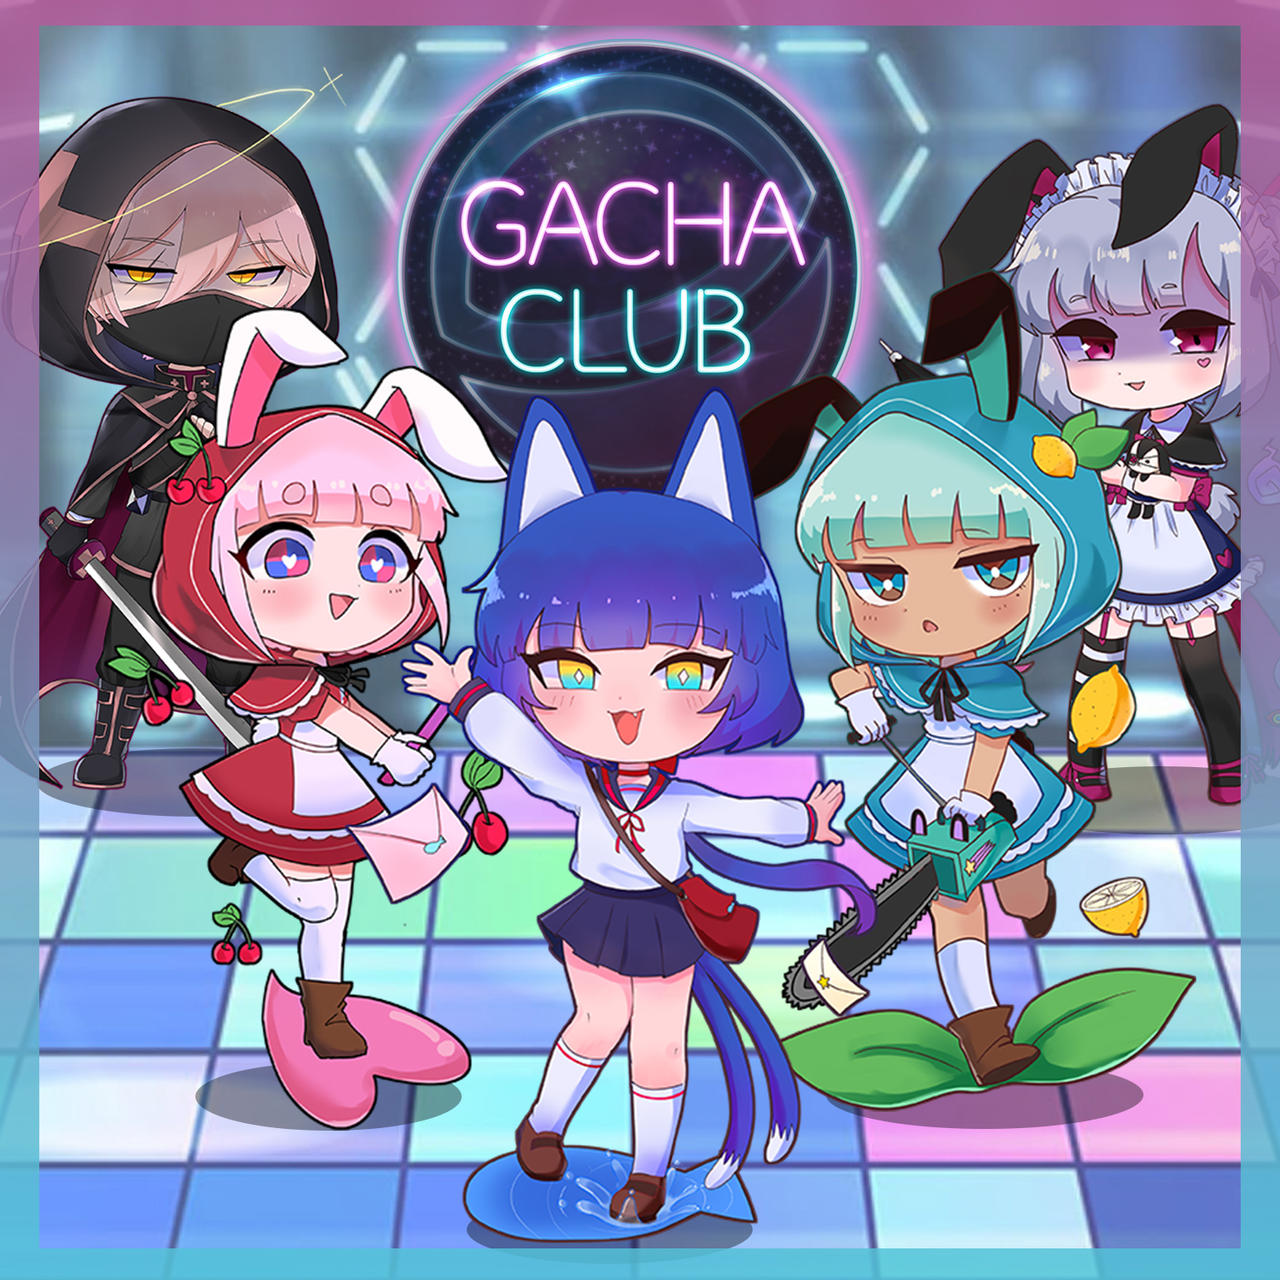 Gacha Club Available Now On iOS! by LunimeGames on DeviantArt